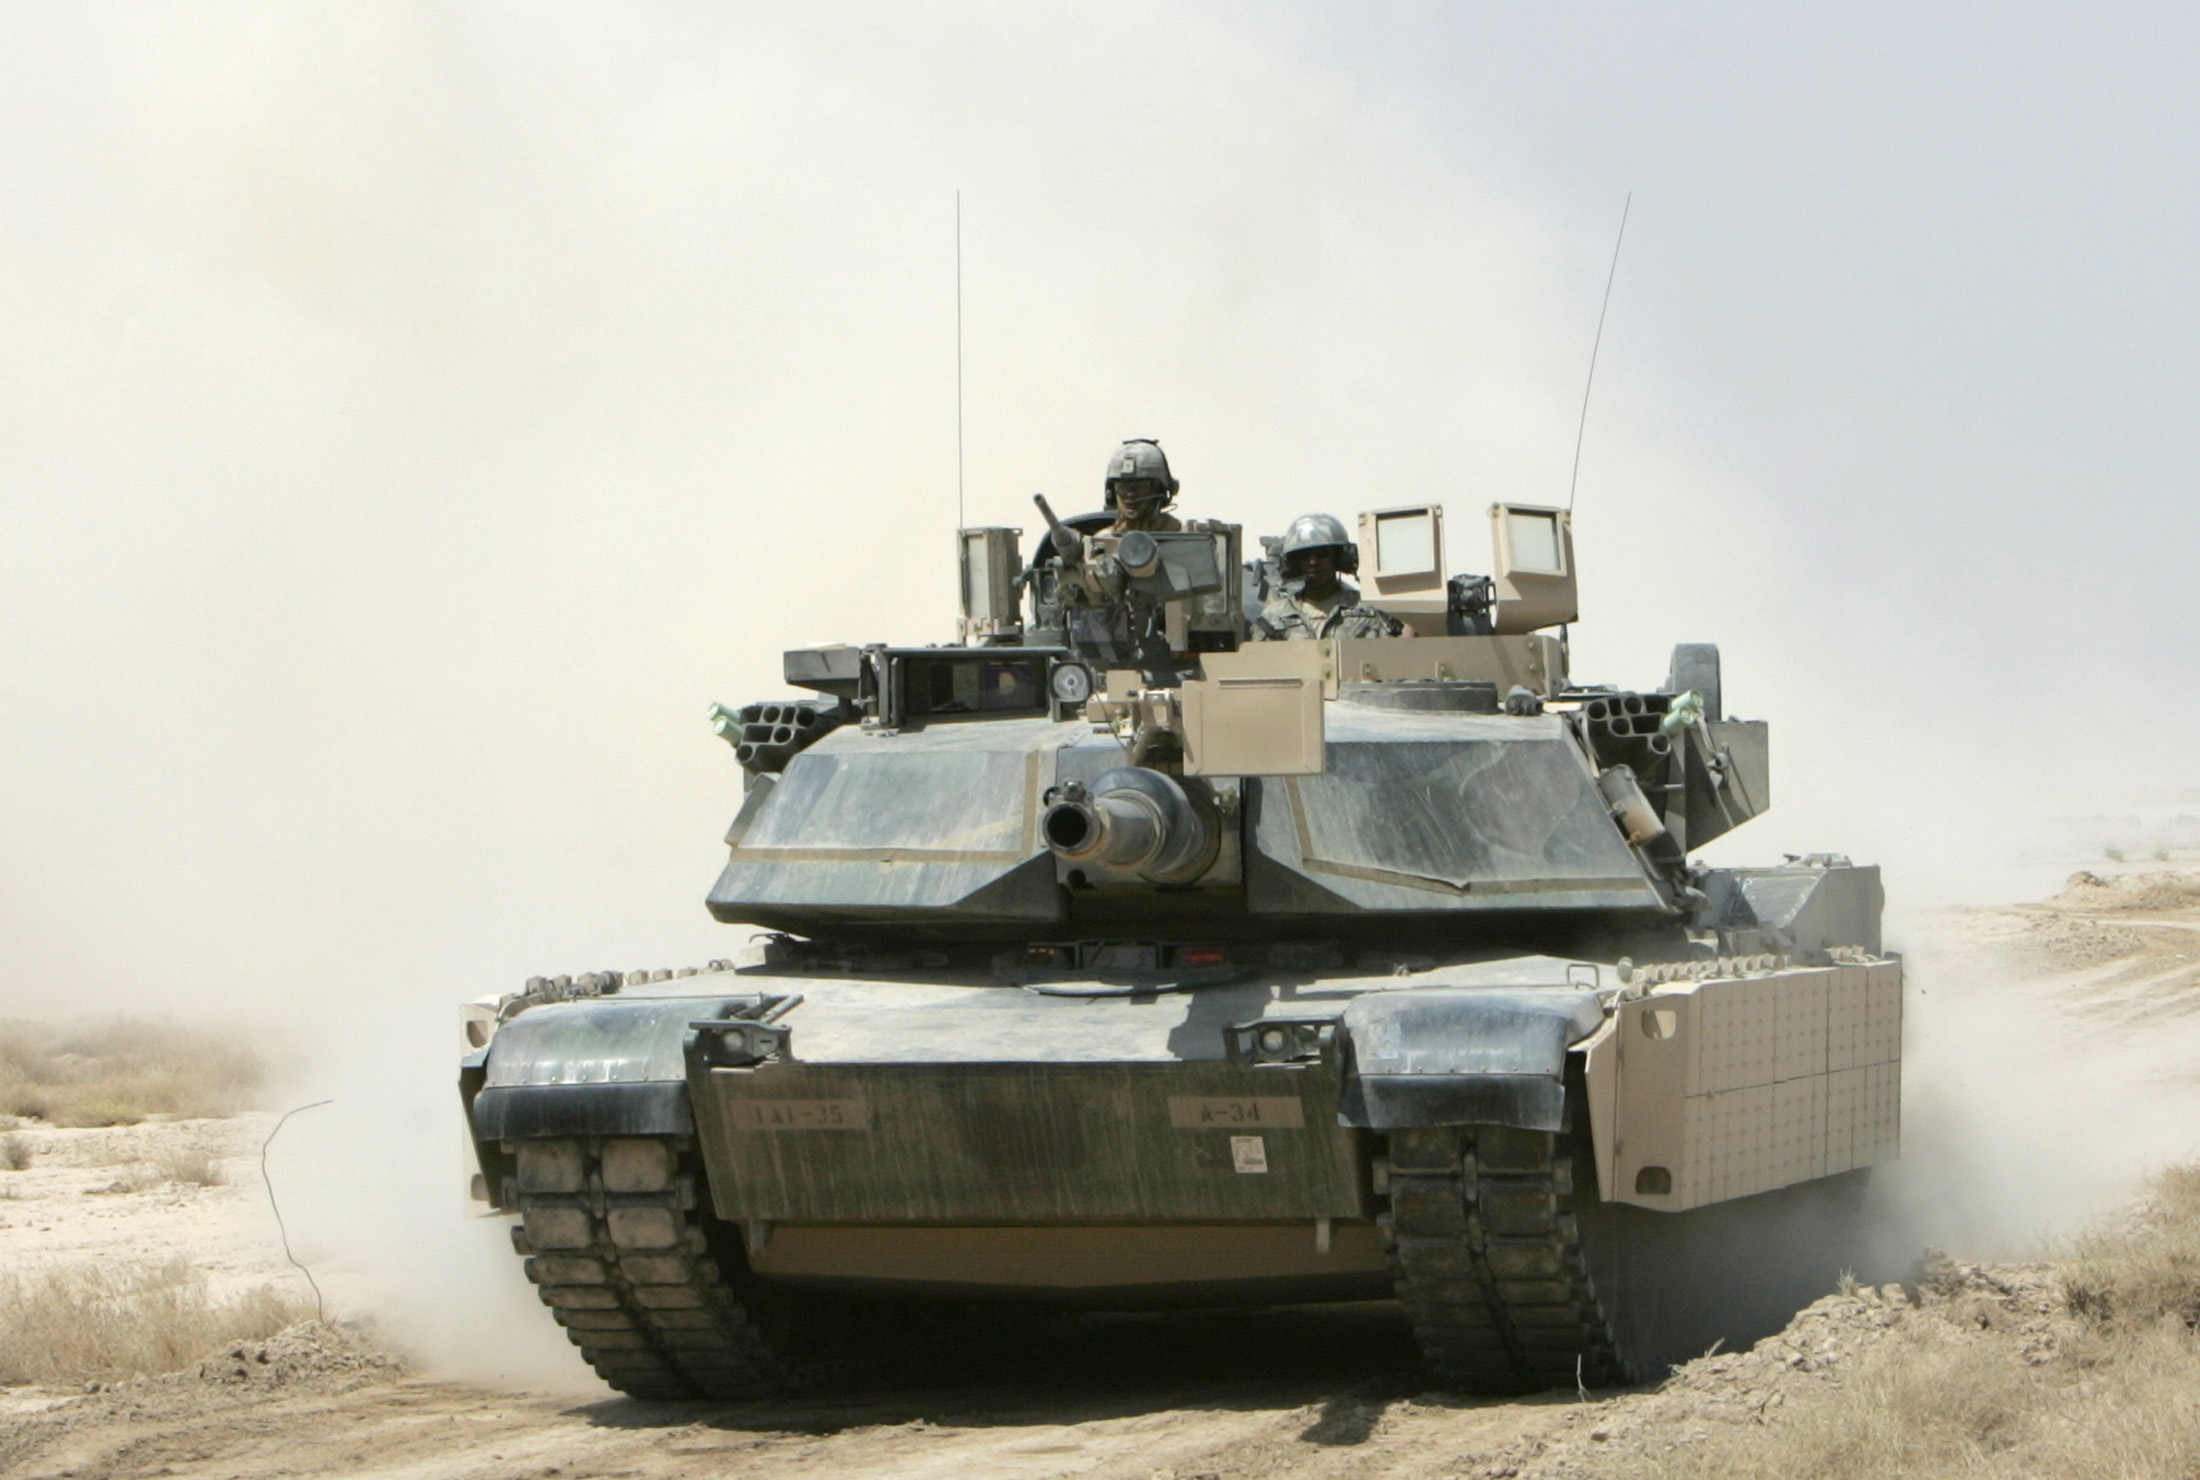 The Abrahams A1 tank - $400 million